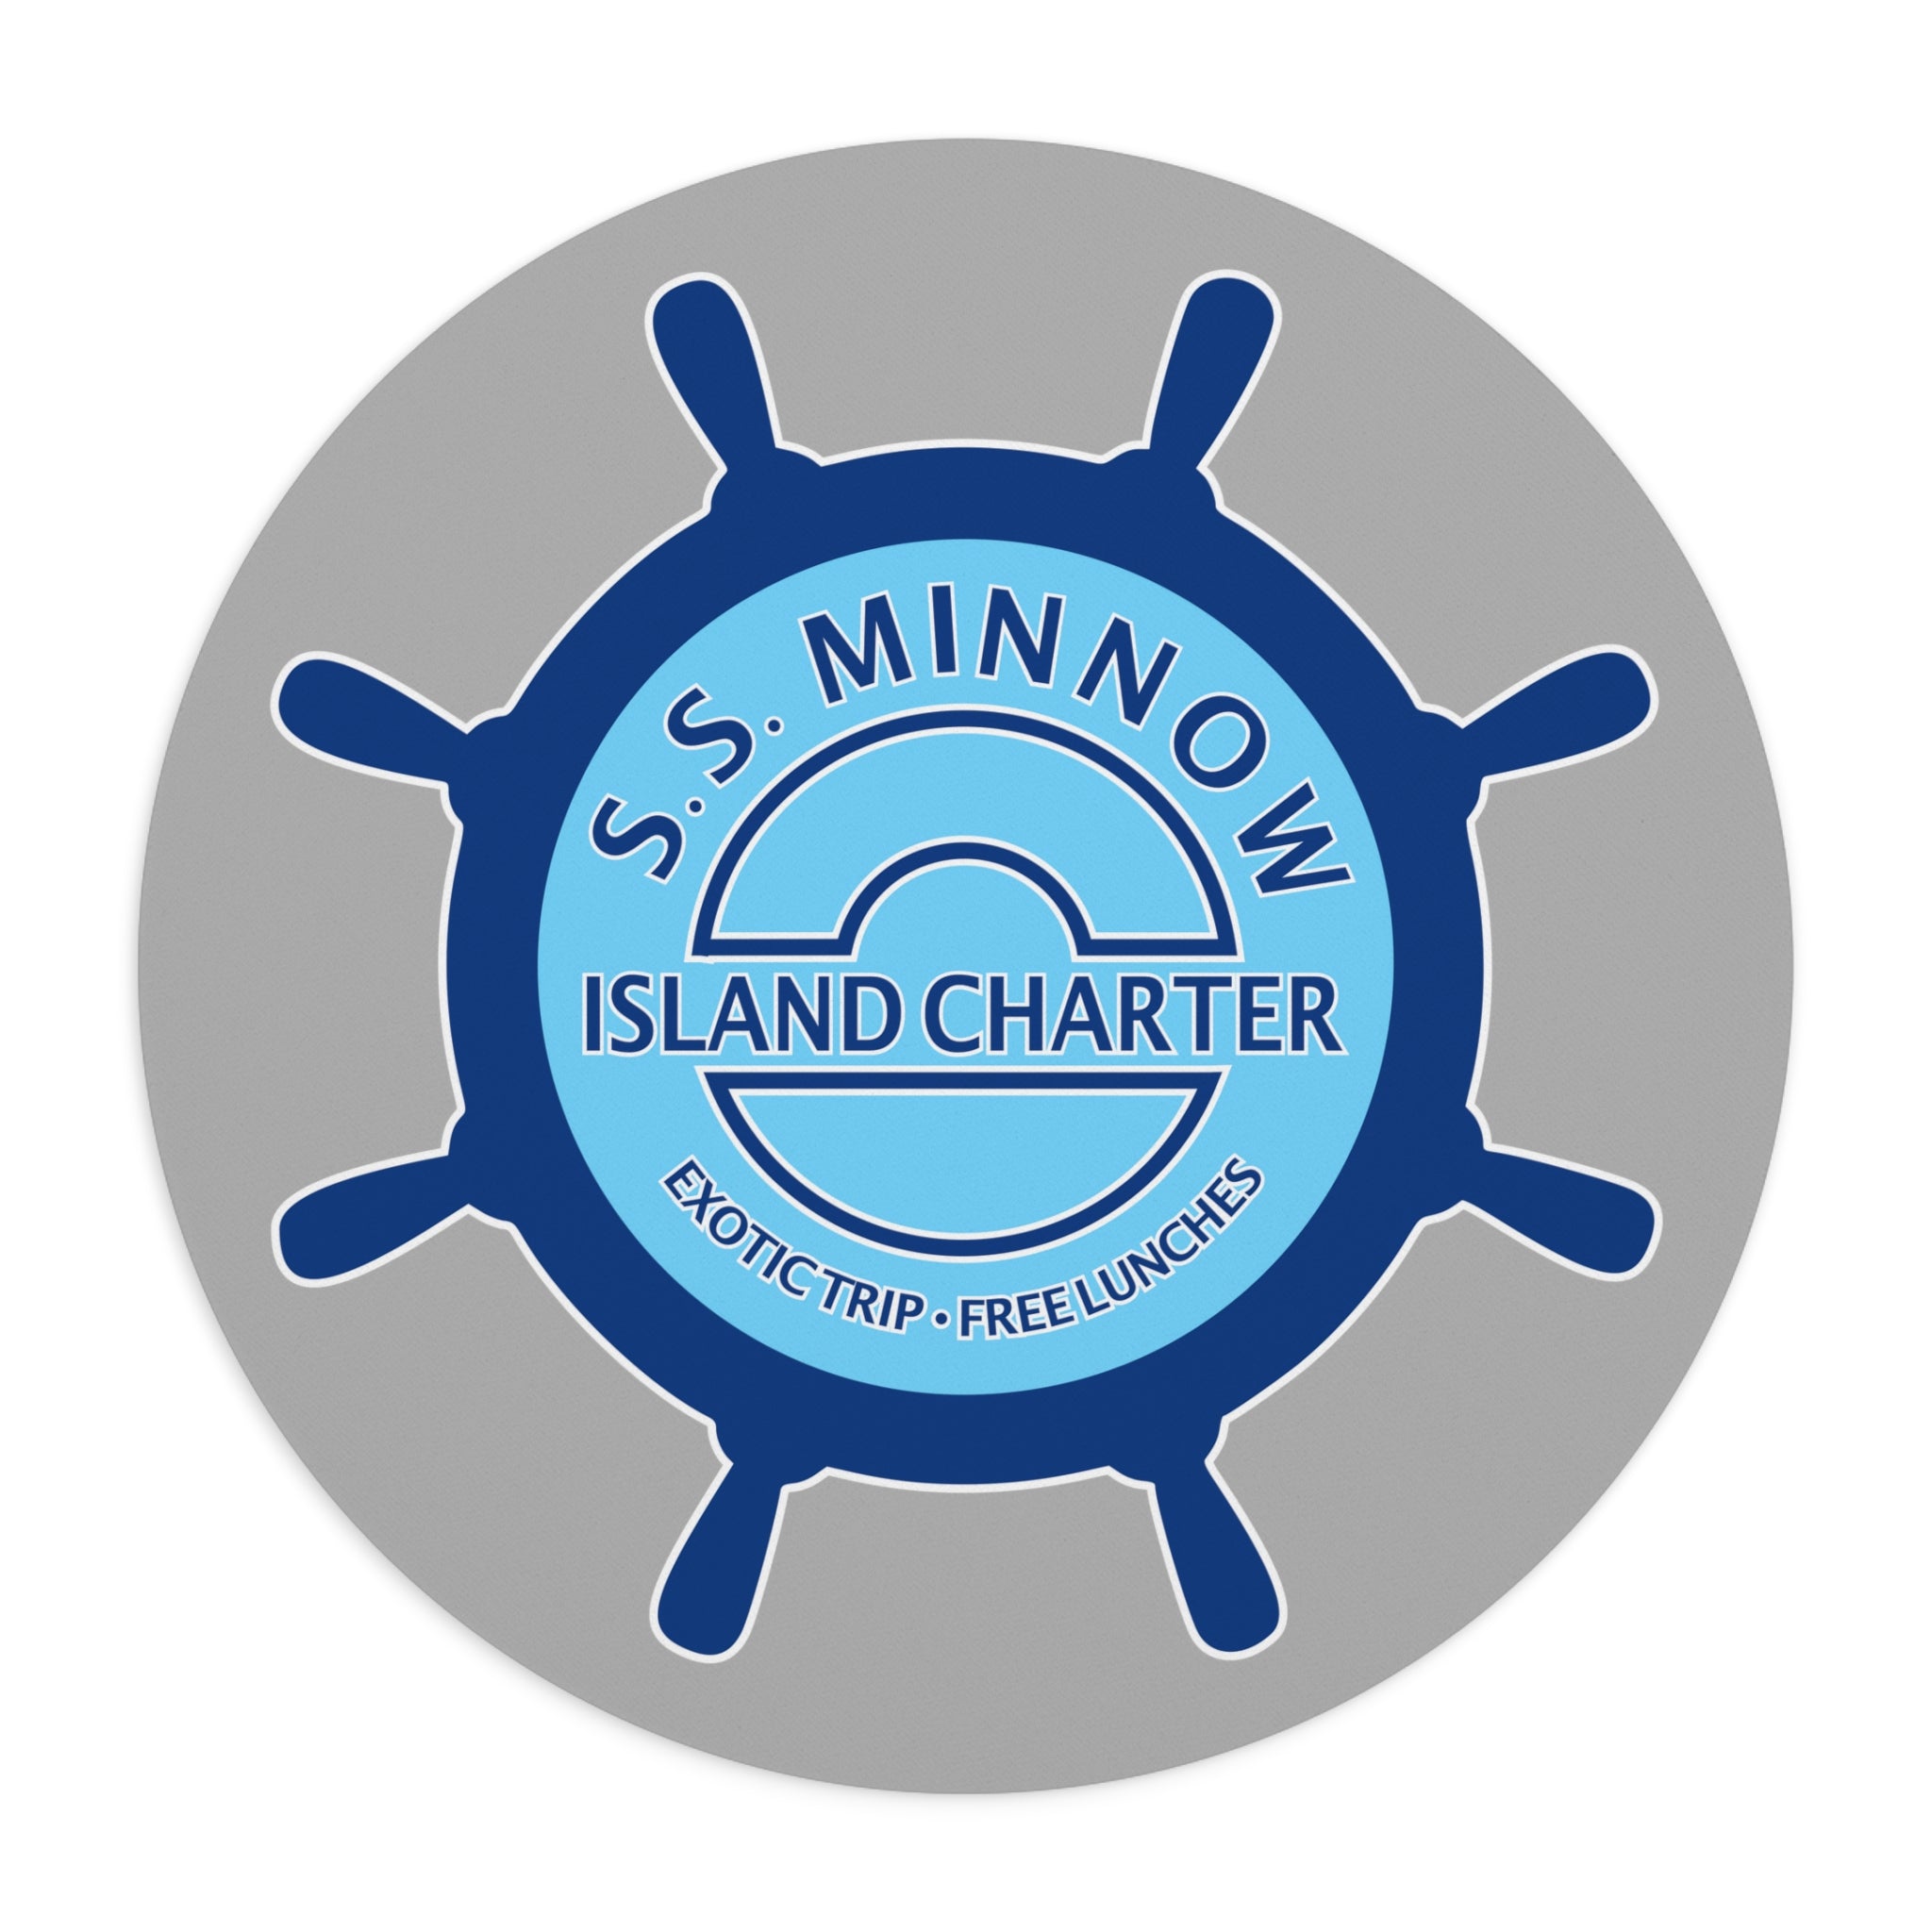 S.S. Minnow Round Mousepad - Gilligan's Island